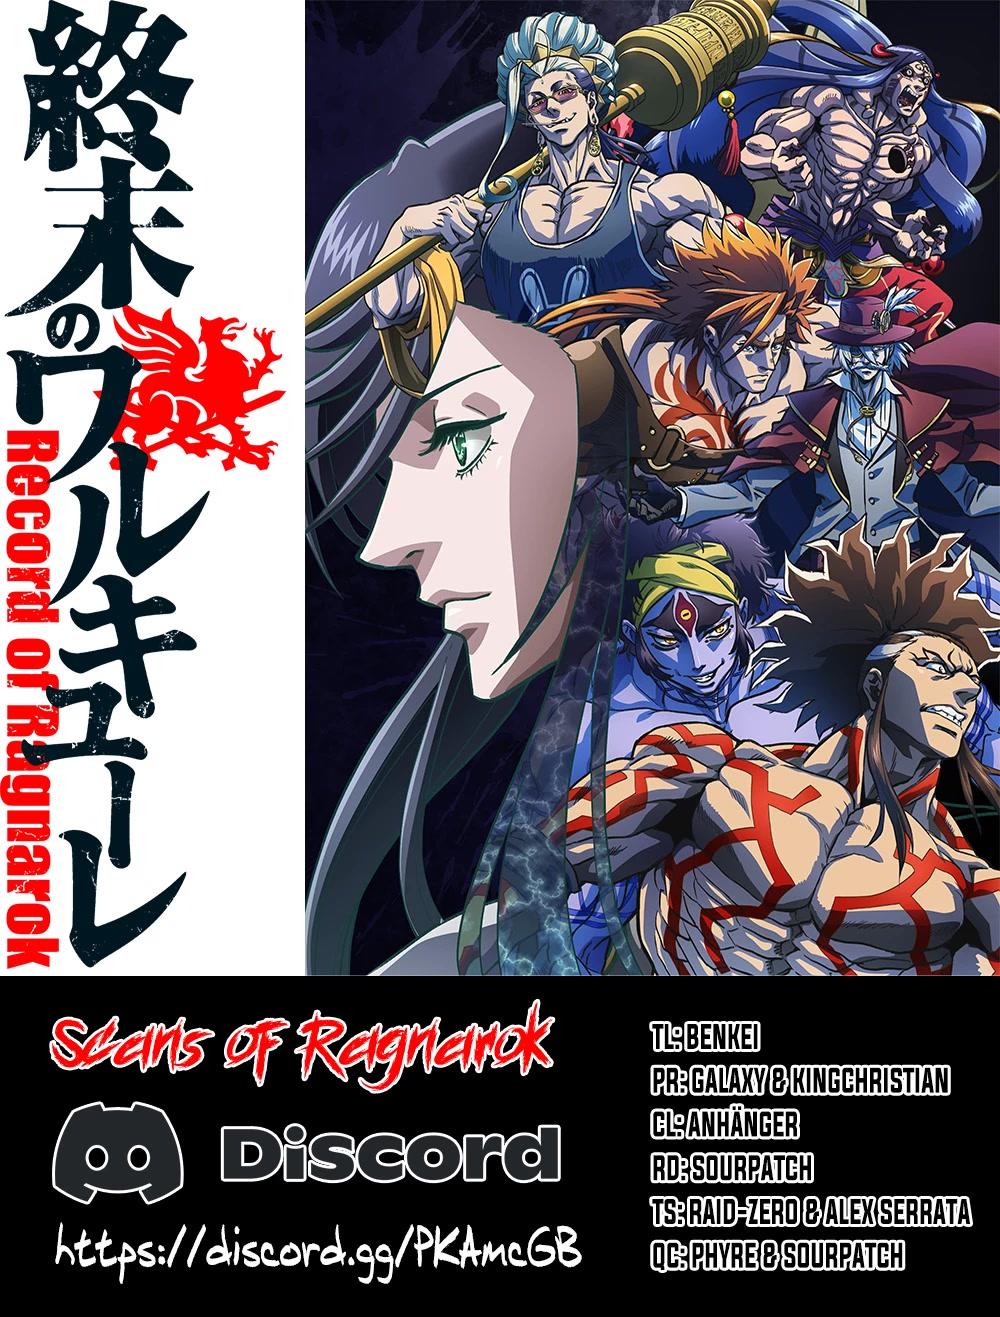 Record of ragnarok manga chapter 73